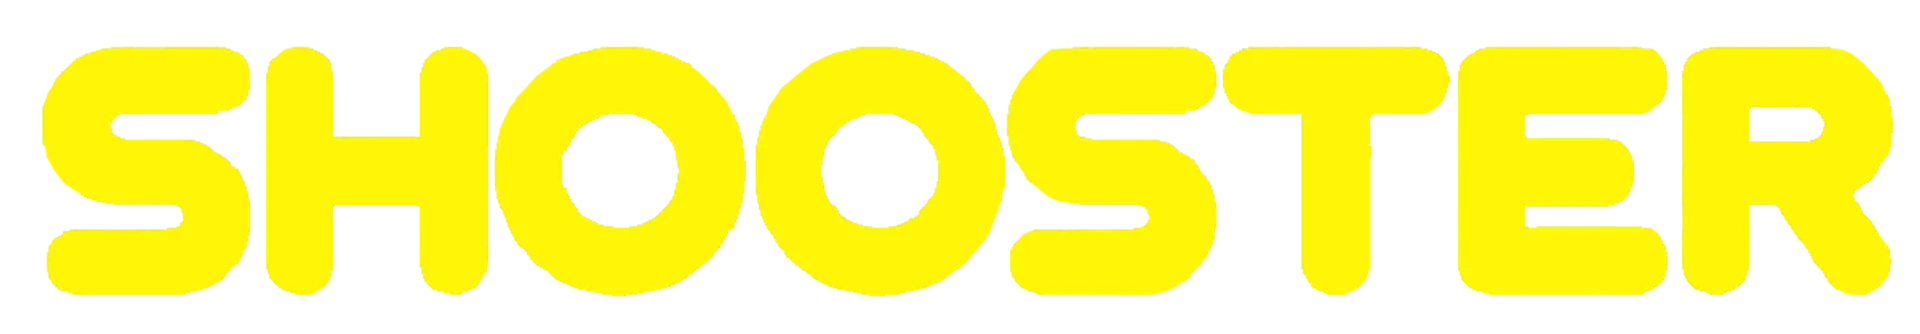 SHOOSTER logo